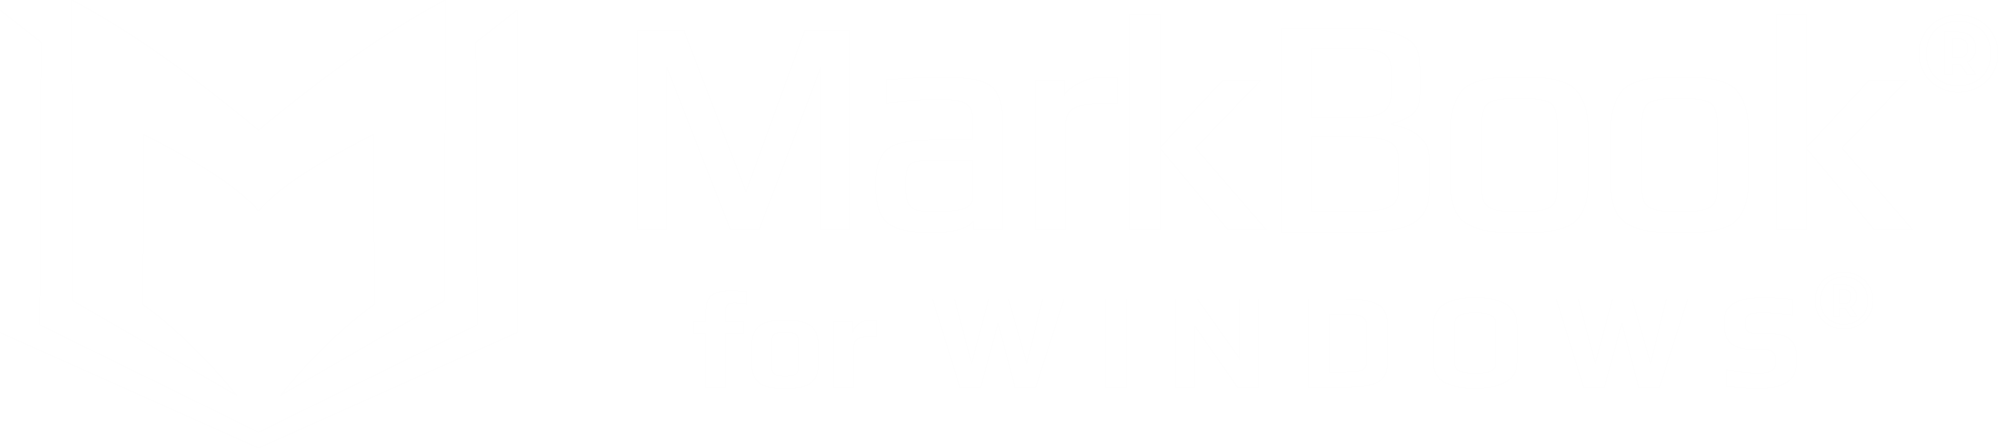 MarkBook for WindowsLogo